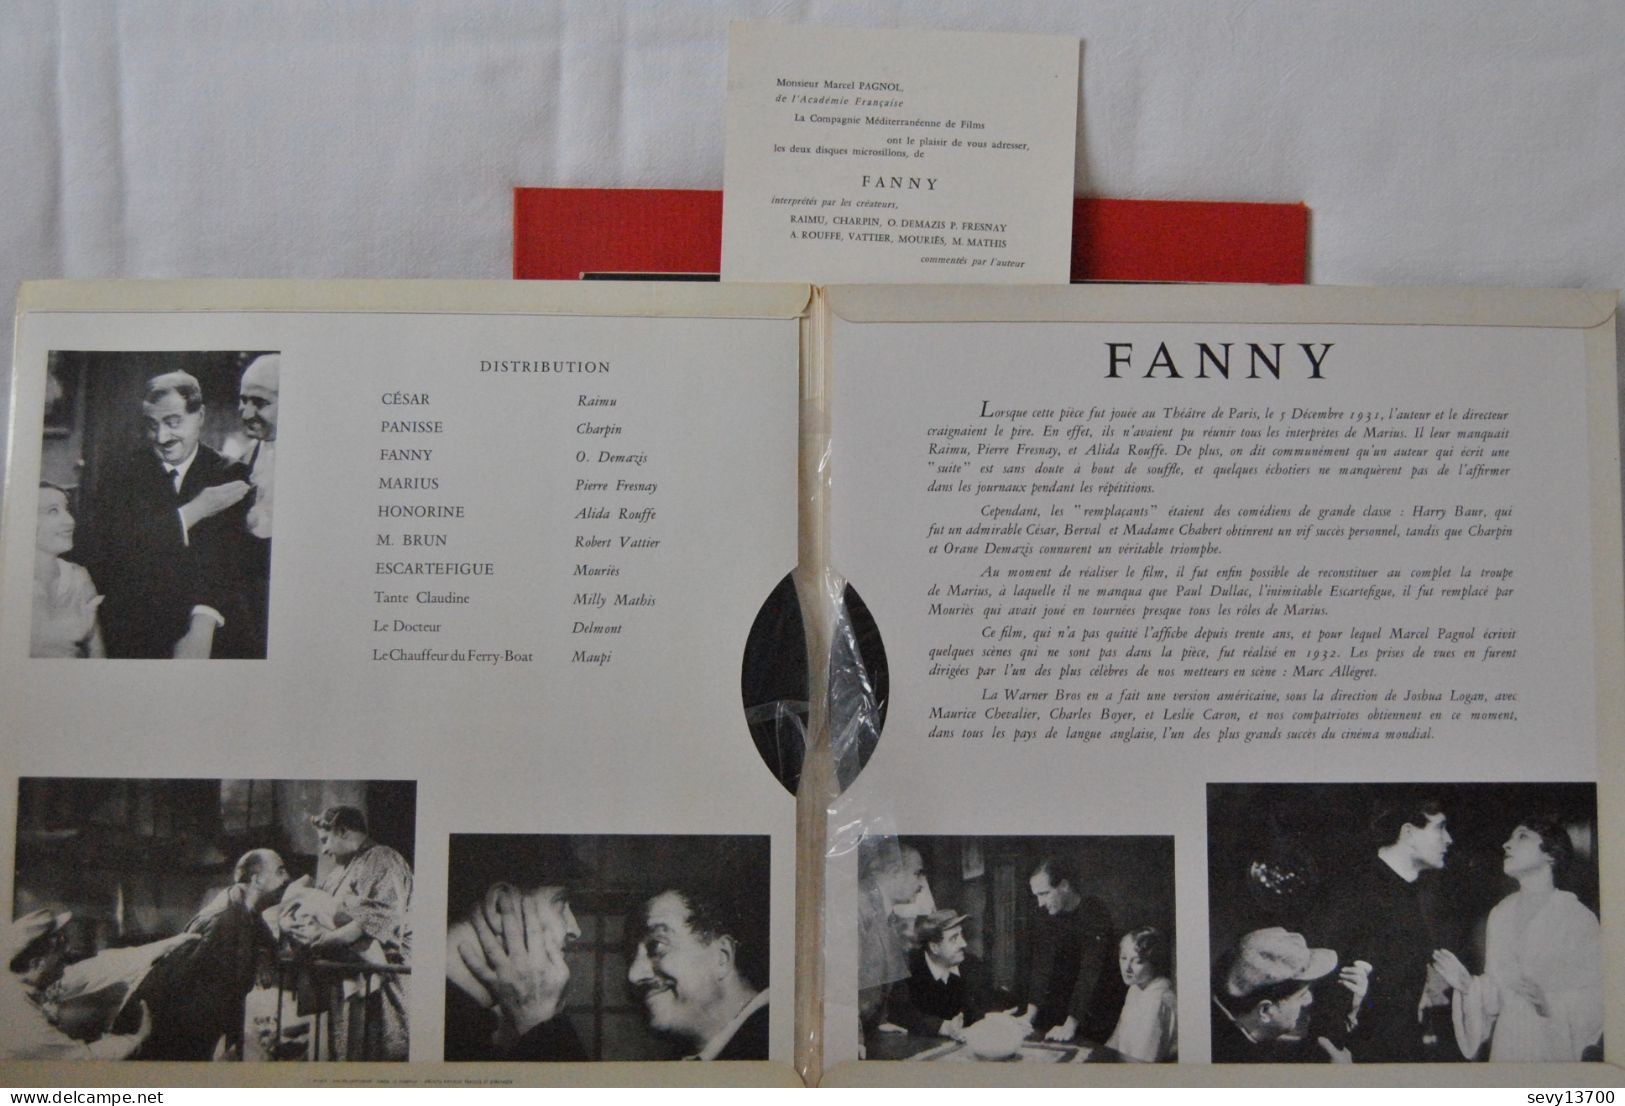 Raimu Dans Fanny De Marcel Pagnol Avec O. Demazis, Charpin, P. Fresnay - Comiques, Cabaret